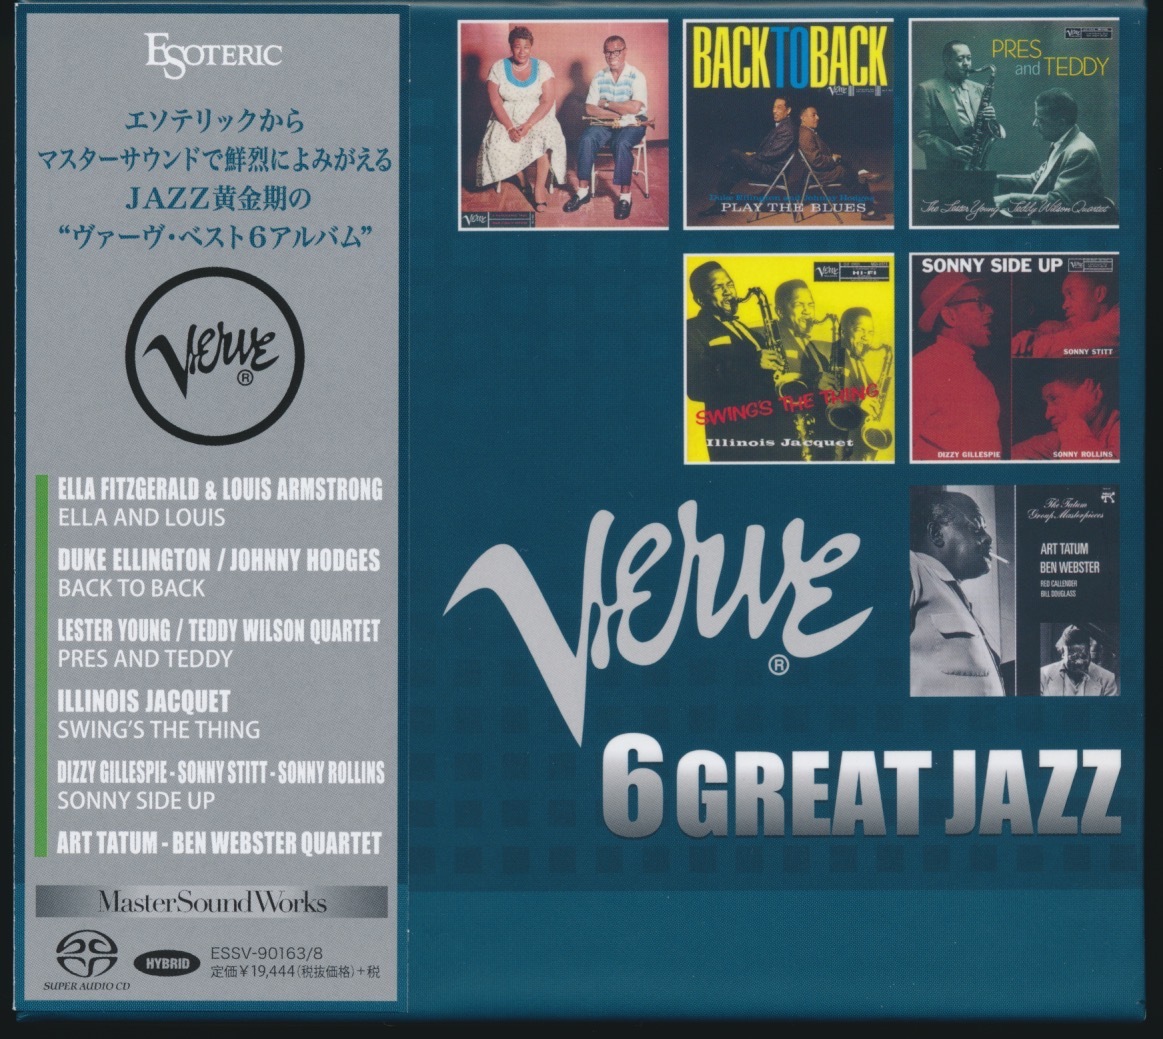 Verve 6 GREAT JAZZ: ESOTERIC SACD エソテリック ESSV-90163/8: エラ・フィツジェラルド; ルイ・アームストロング; ソニー・ロリンズ 他の画像1